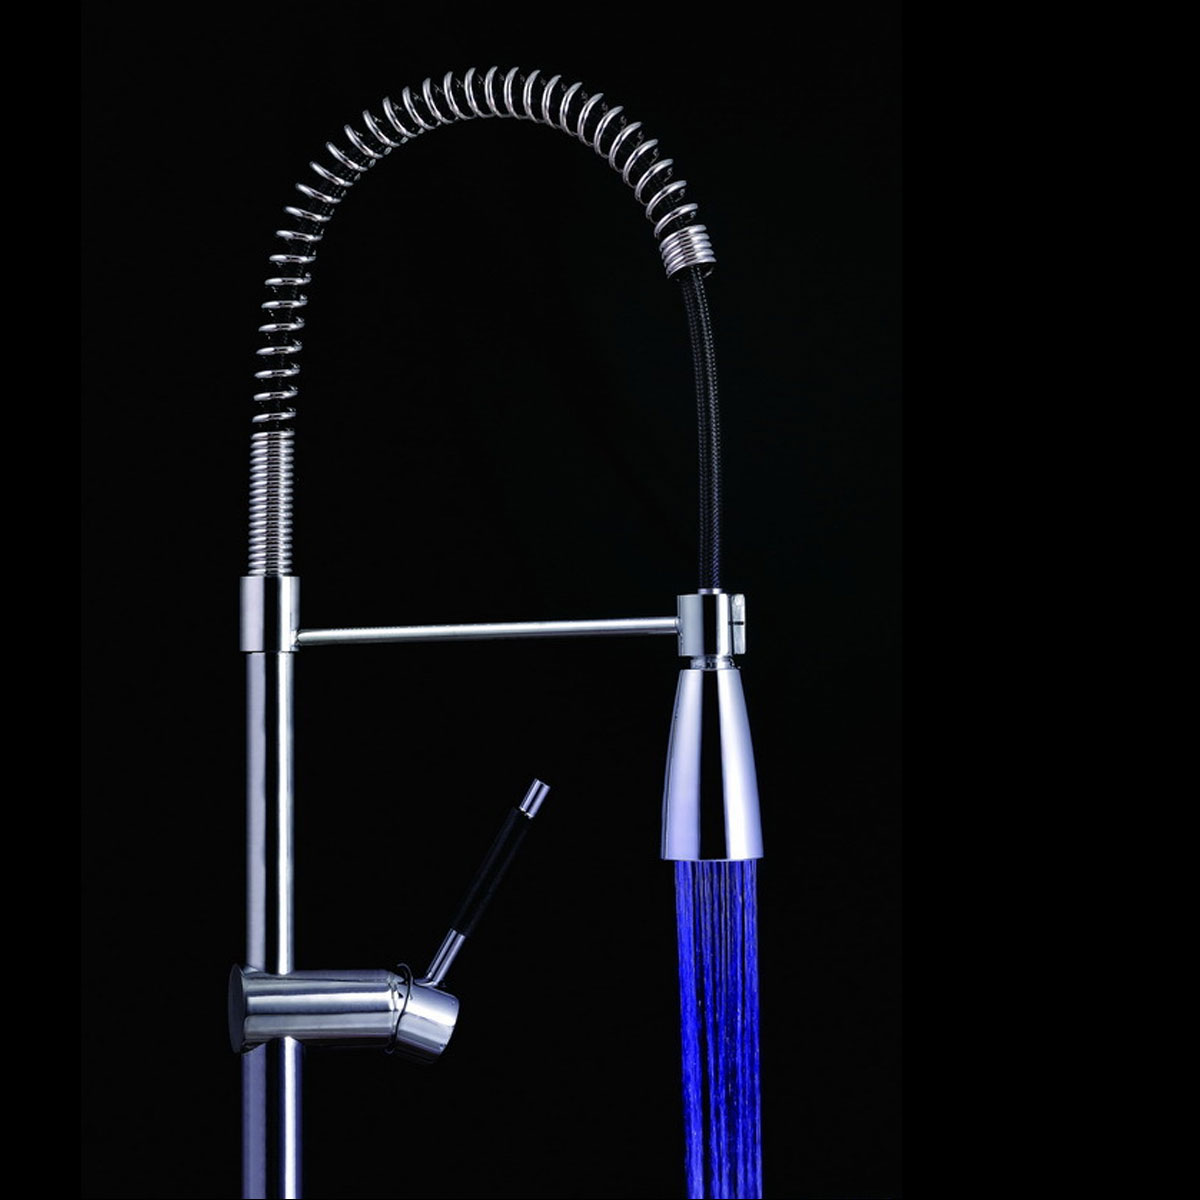 LED-Bathroom-Faucets-Temperature-Control-Spontaneous-3-Colors-Change-Light-Tap-Temperature-Sensor-Mi-1258945